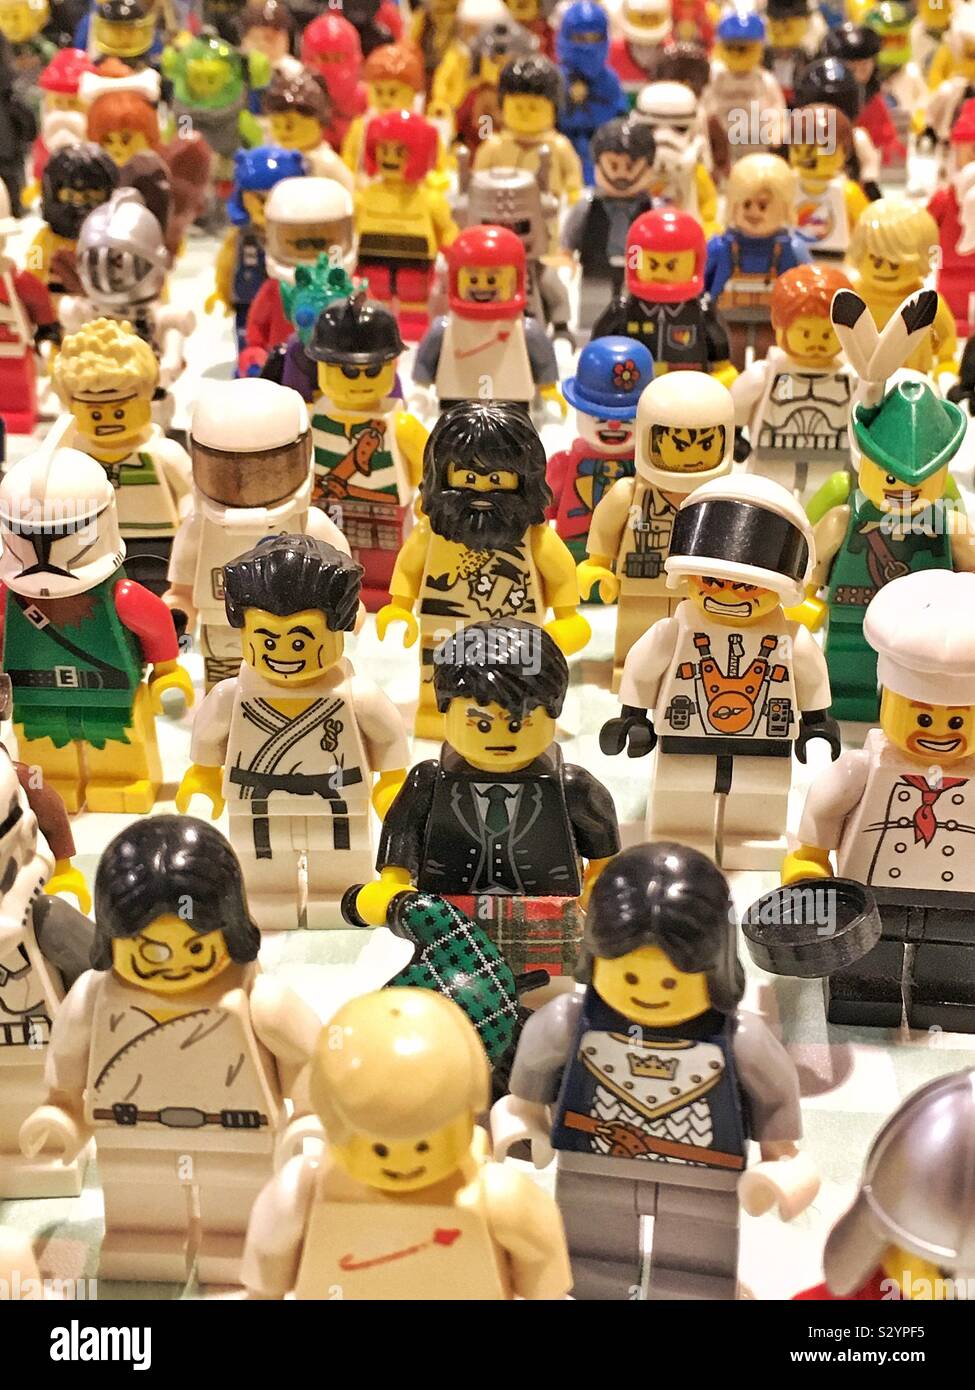 Lego character crowd Stock Photo - Alamy